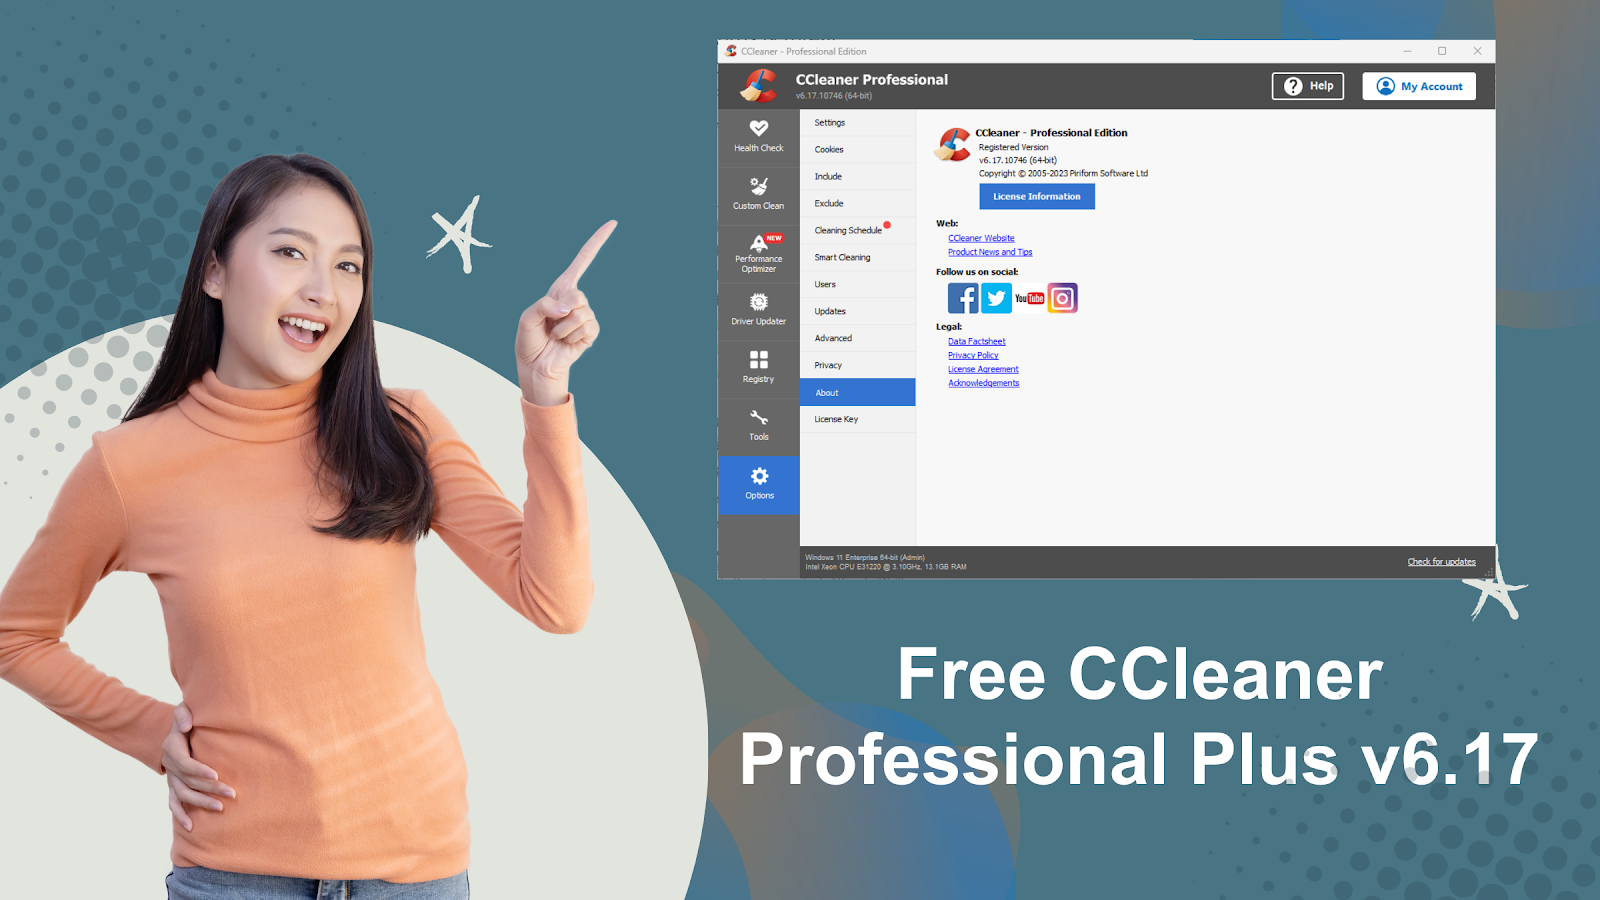 CCleaner Professional Plus v6.17